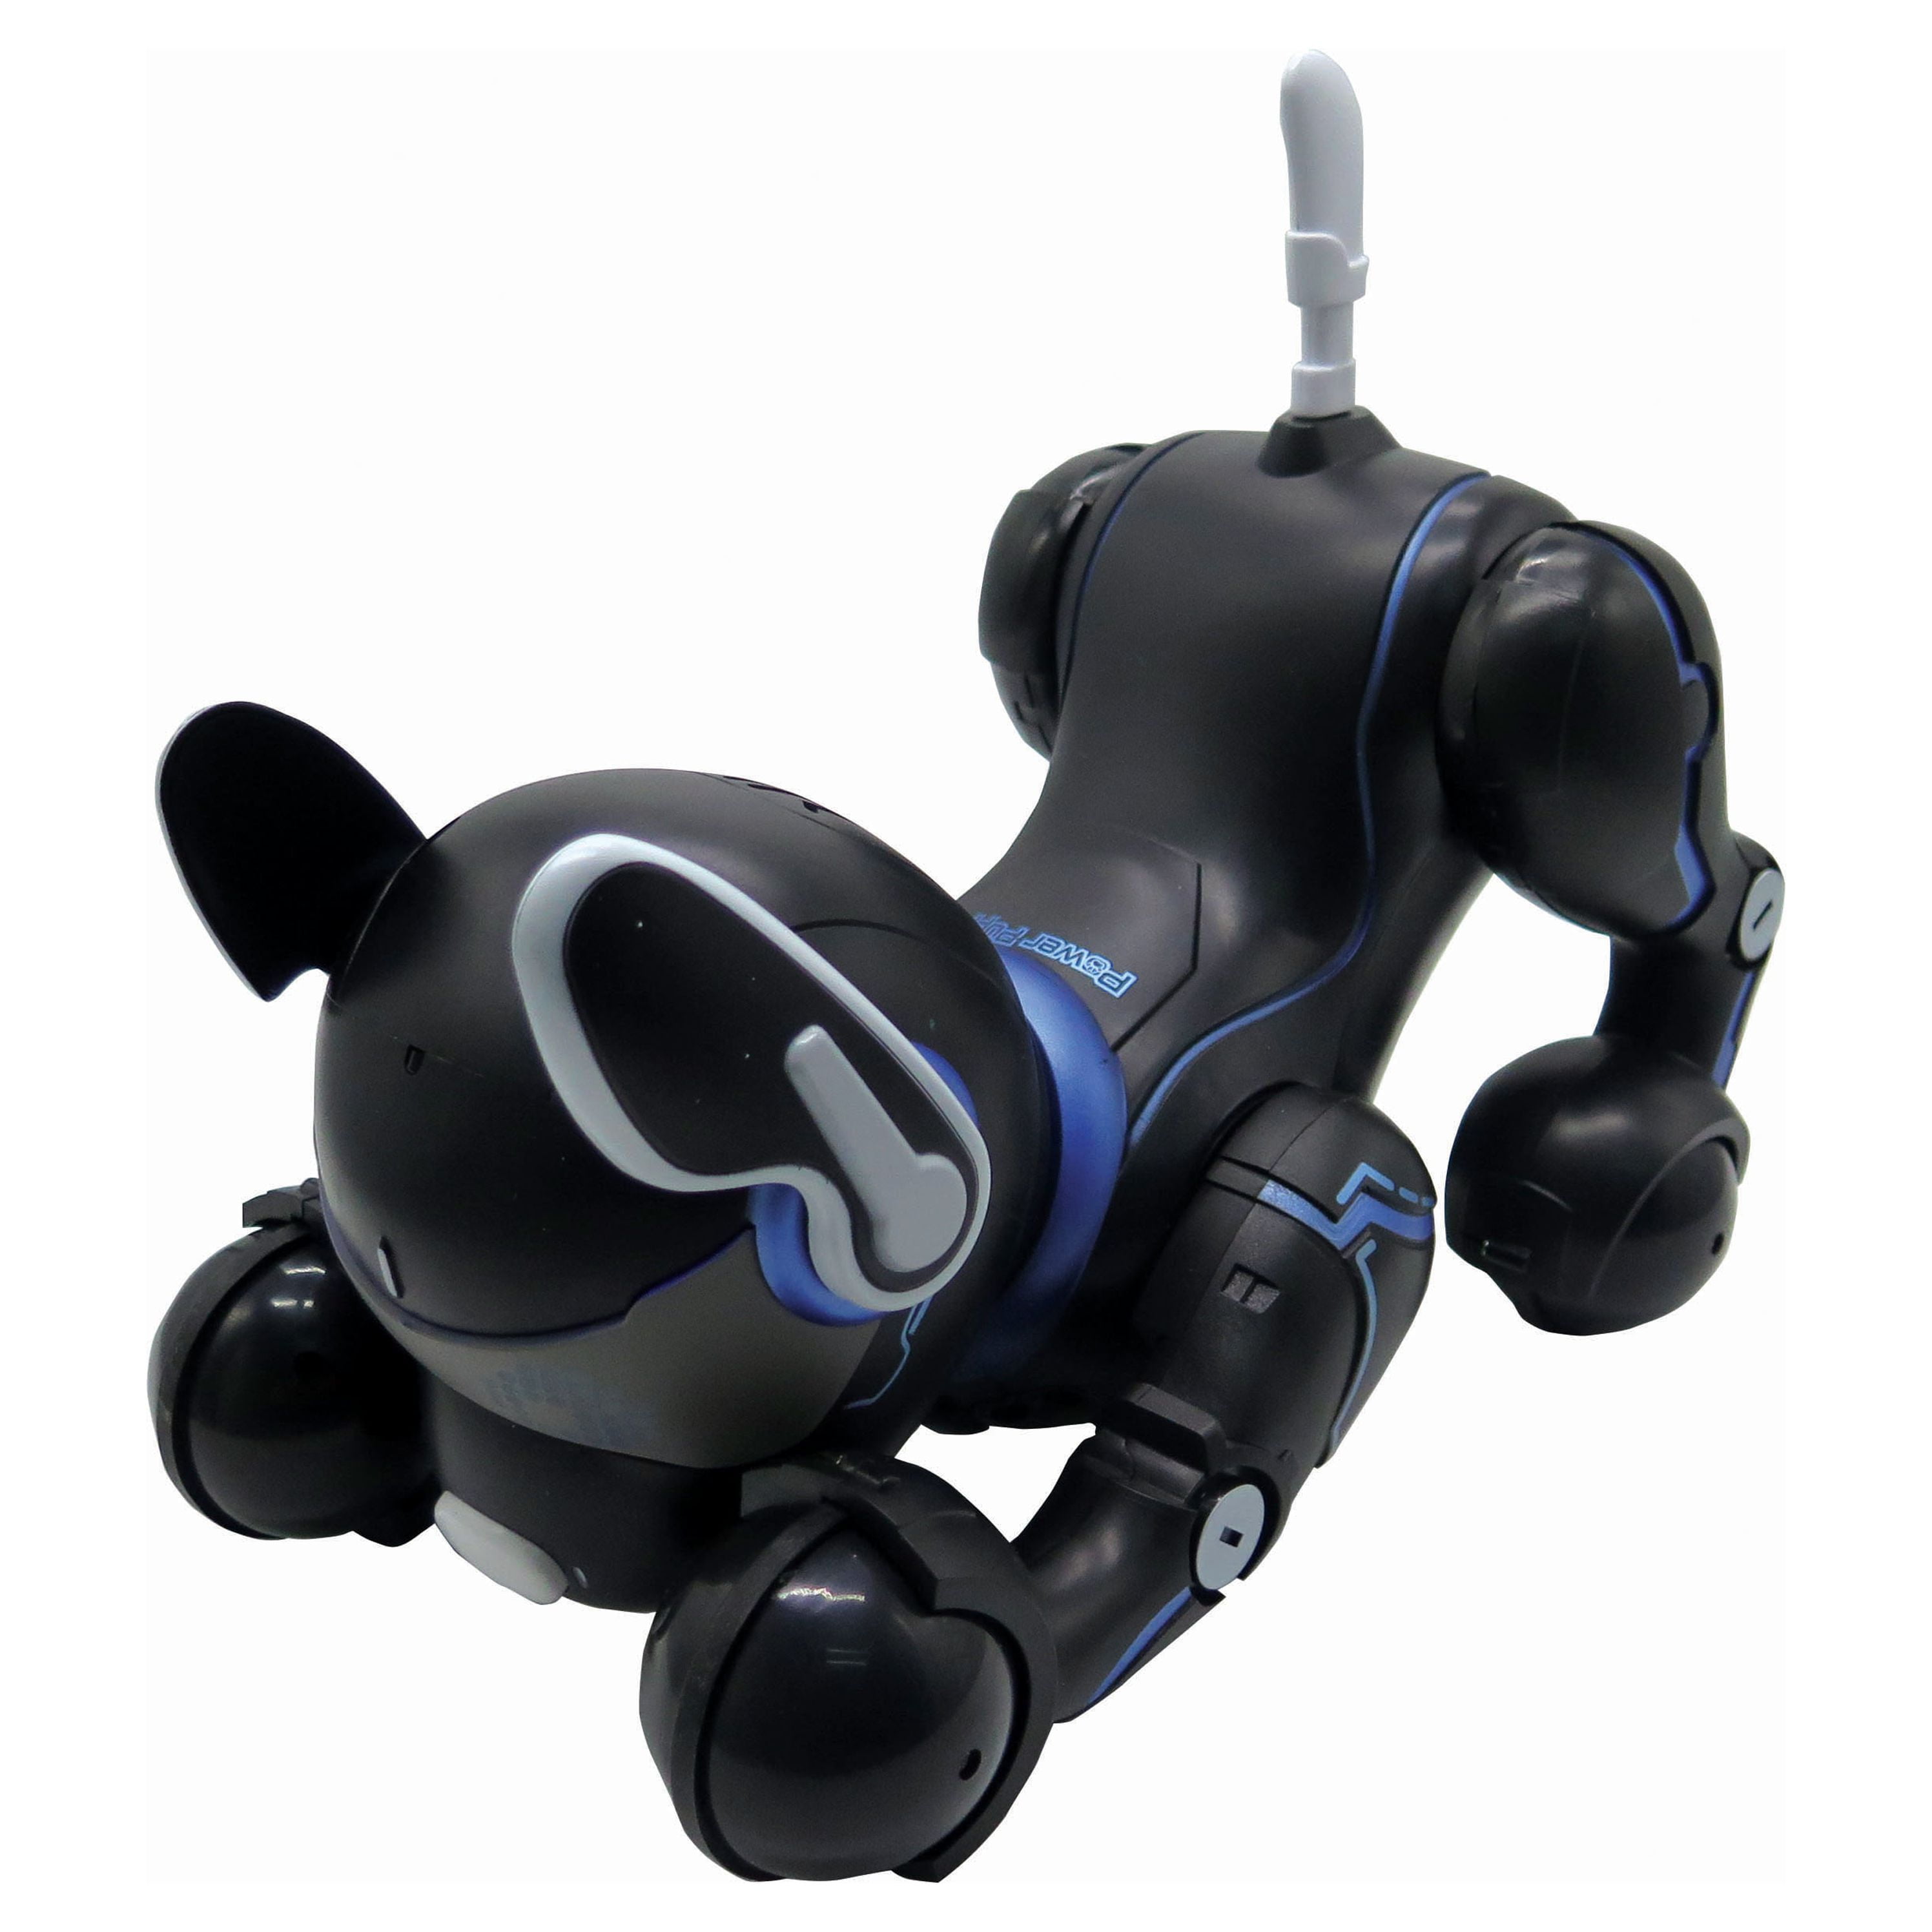 Buy Lexibook Power Puppy Smart Robotic Dog